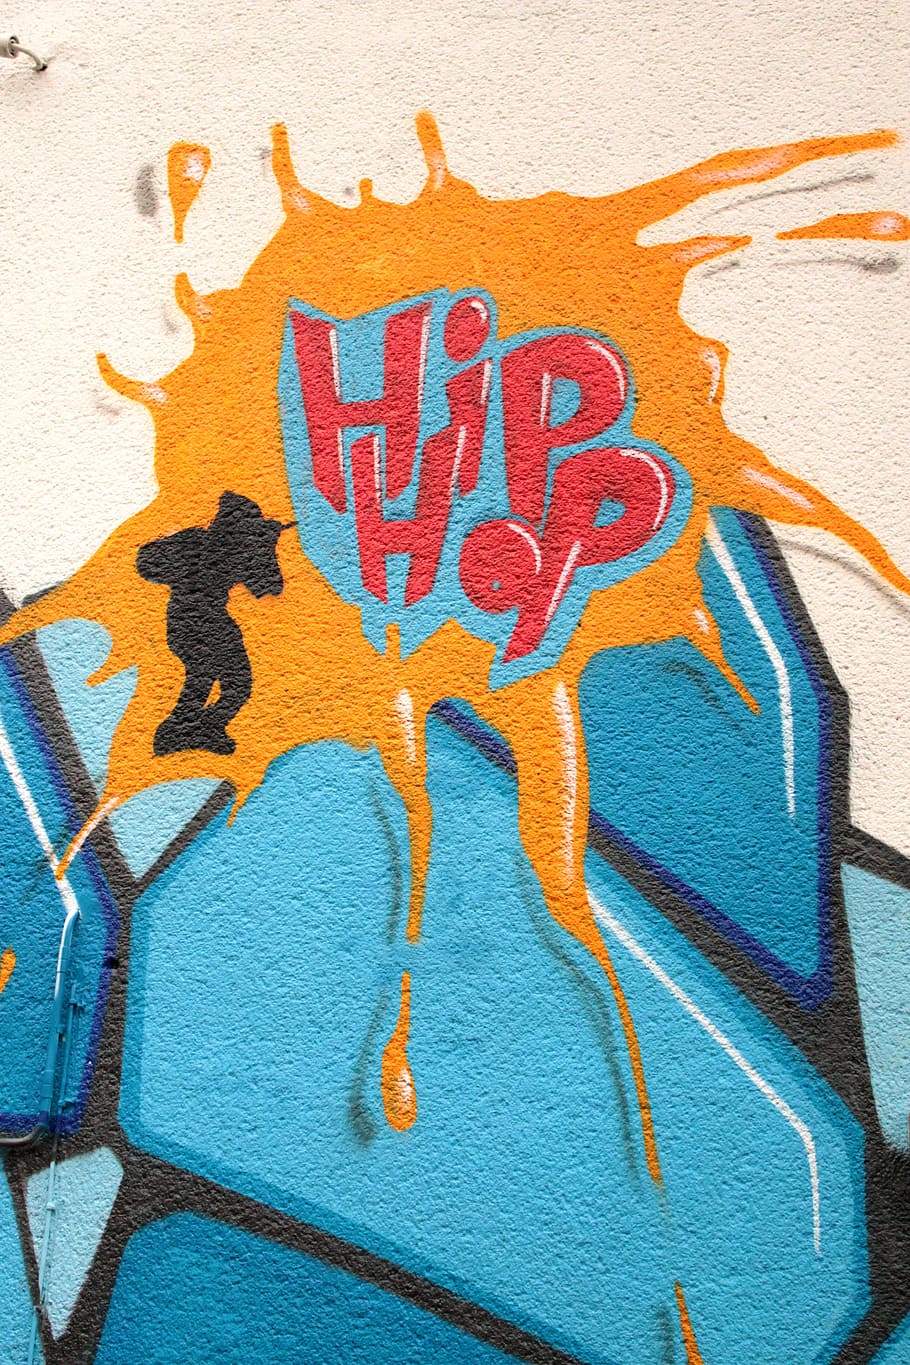 hip hop illustration, graffiti, hiphop, hip hop, hauswand, wall, home, building, facade, color